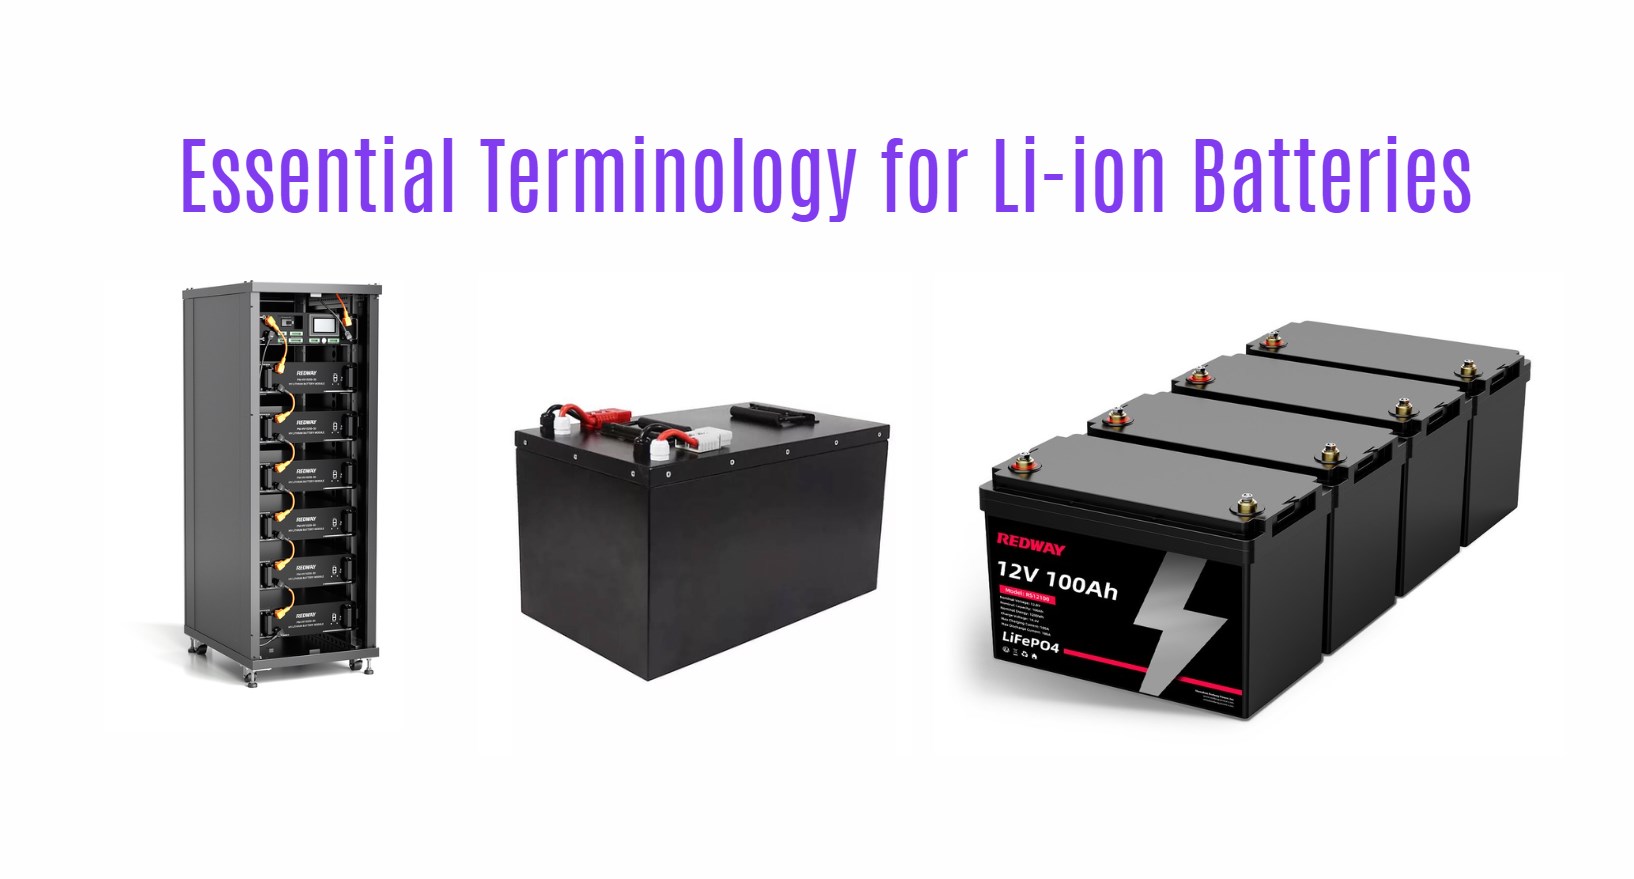 Essential Terminology for Li-ion Batteries